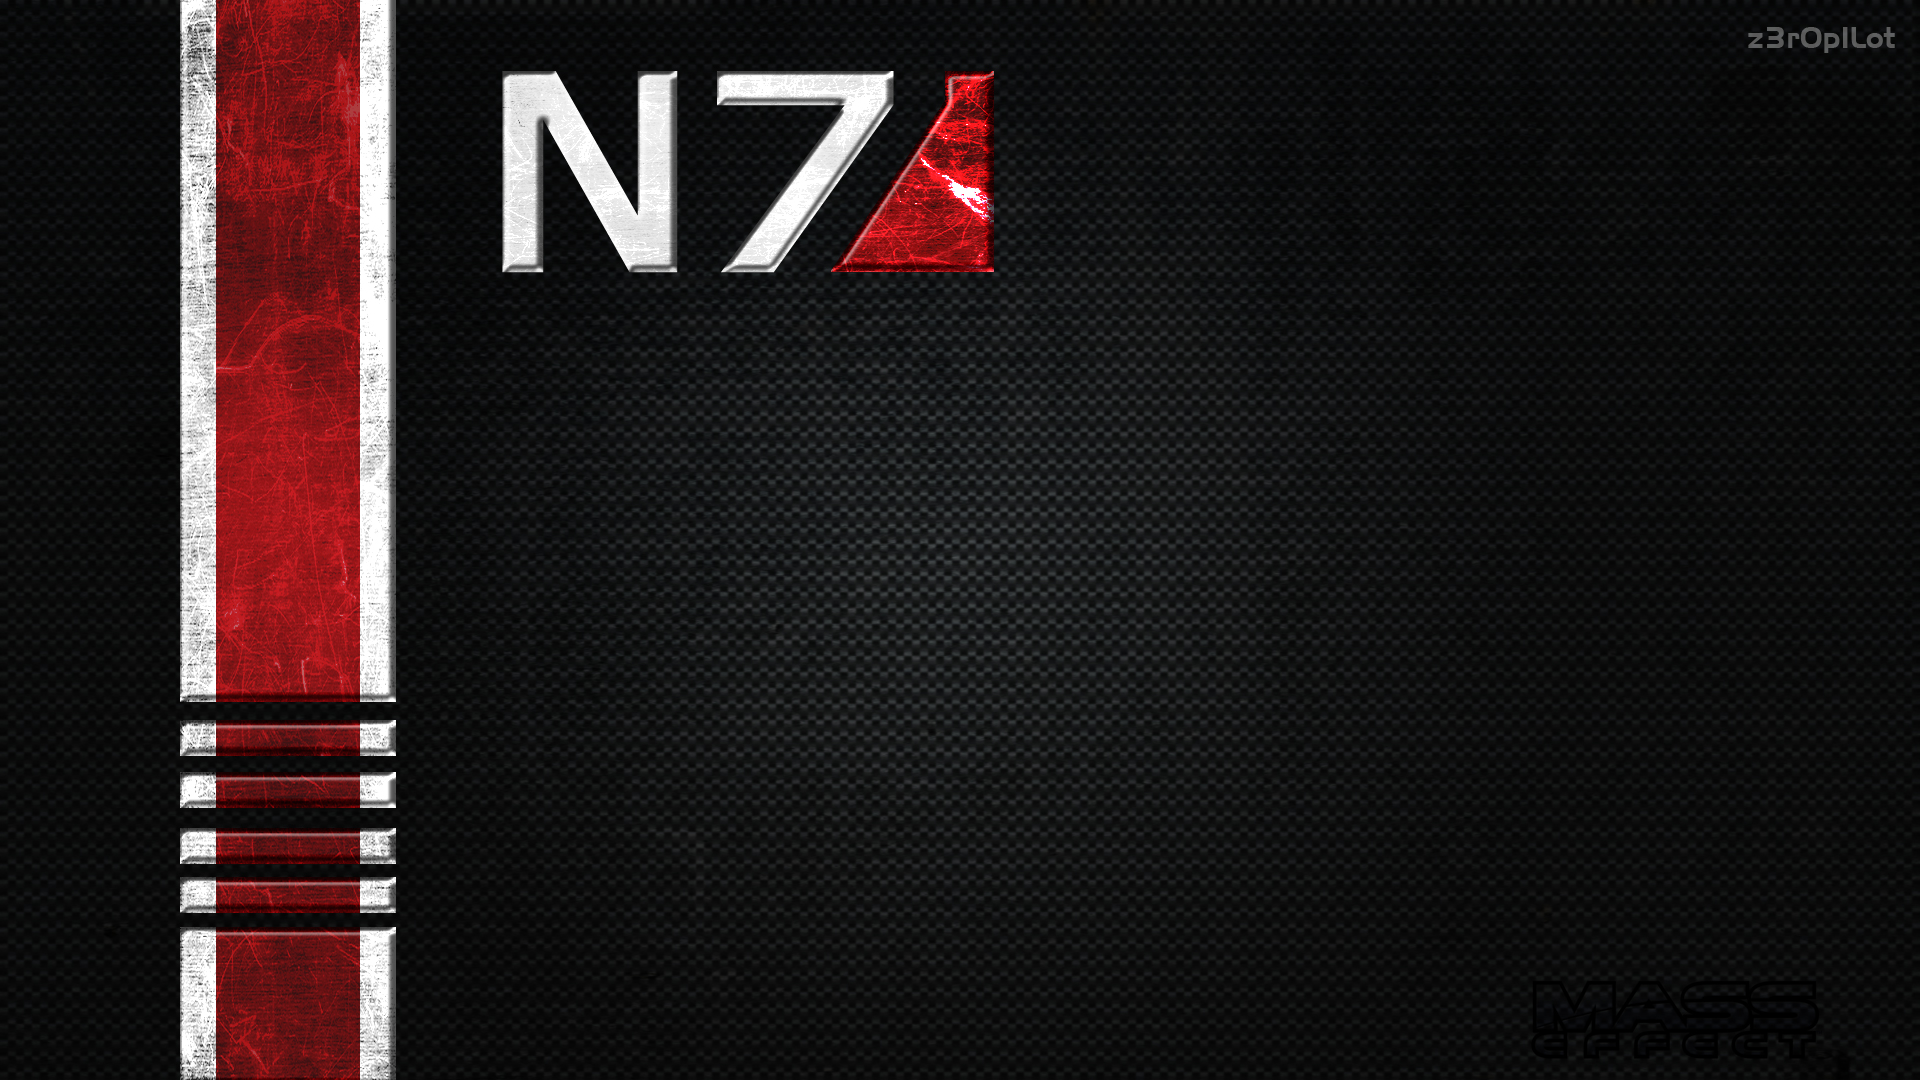 N7 Wallpaper Full HD